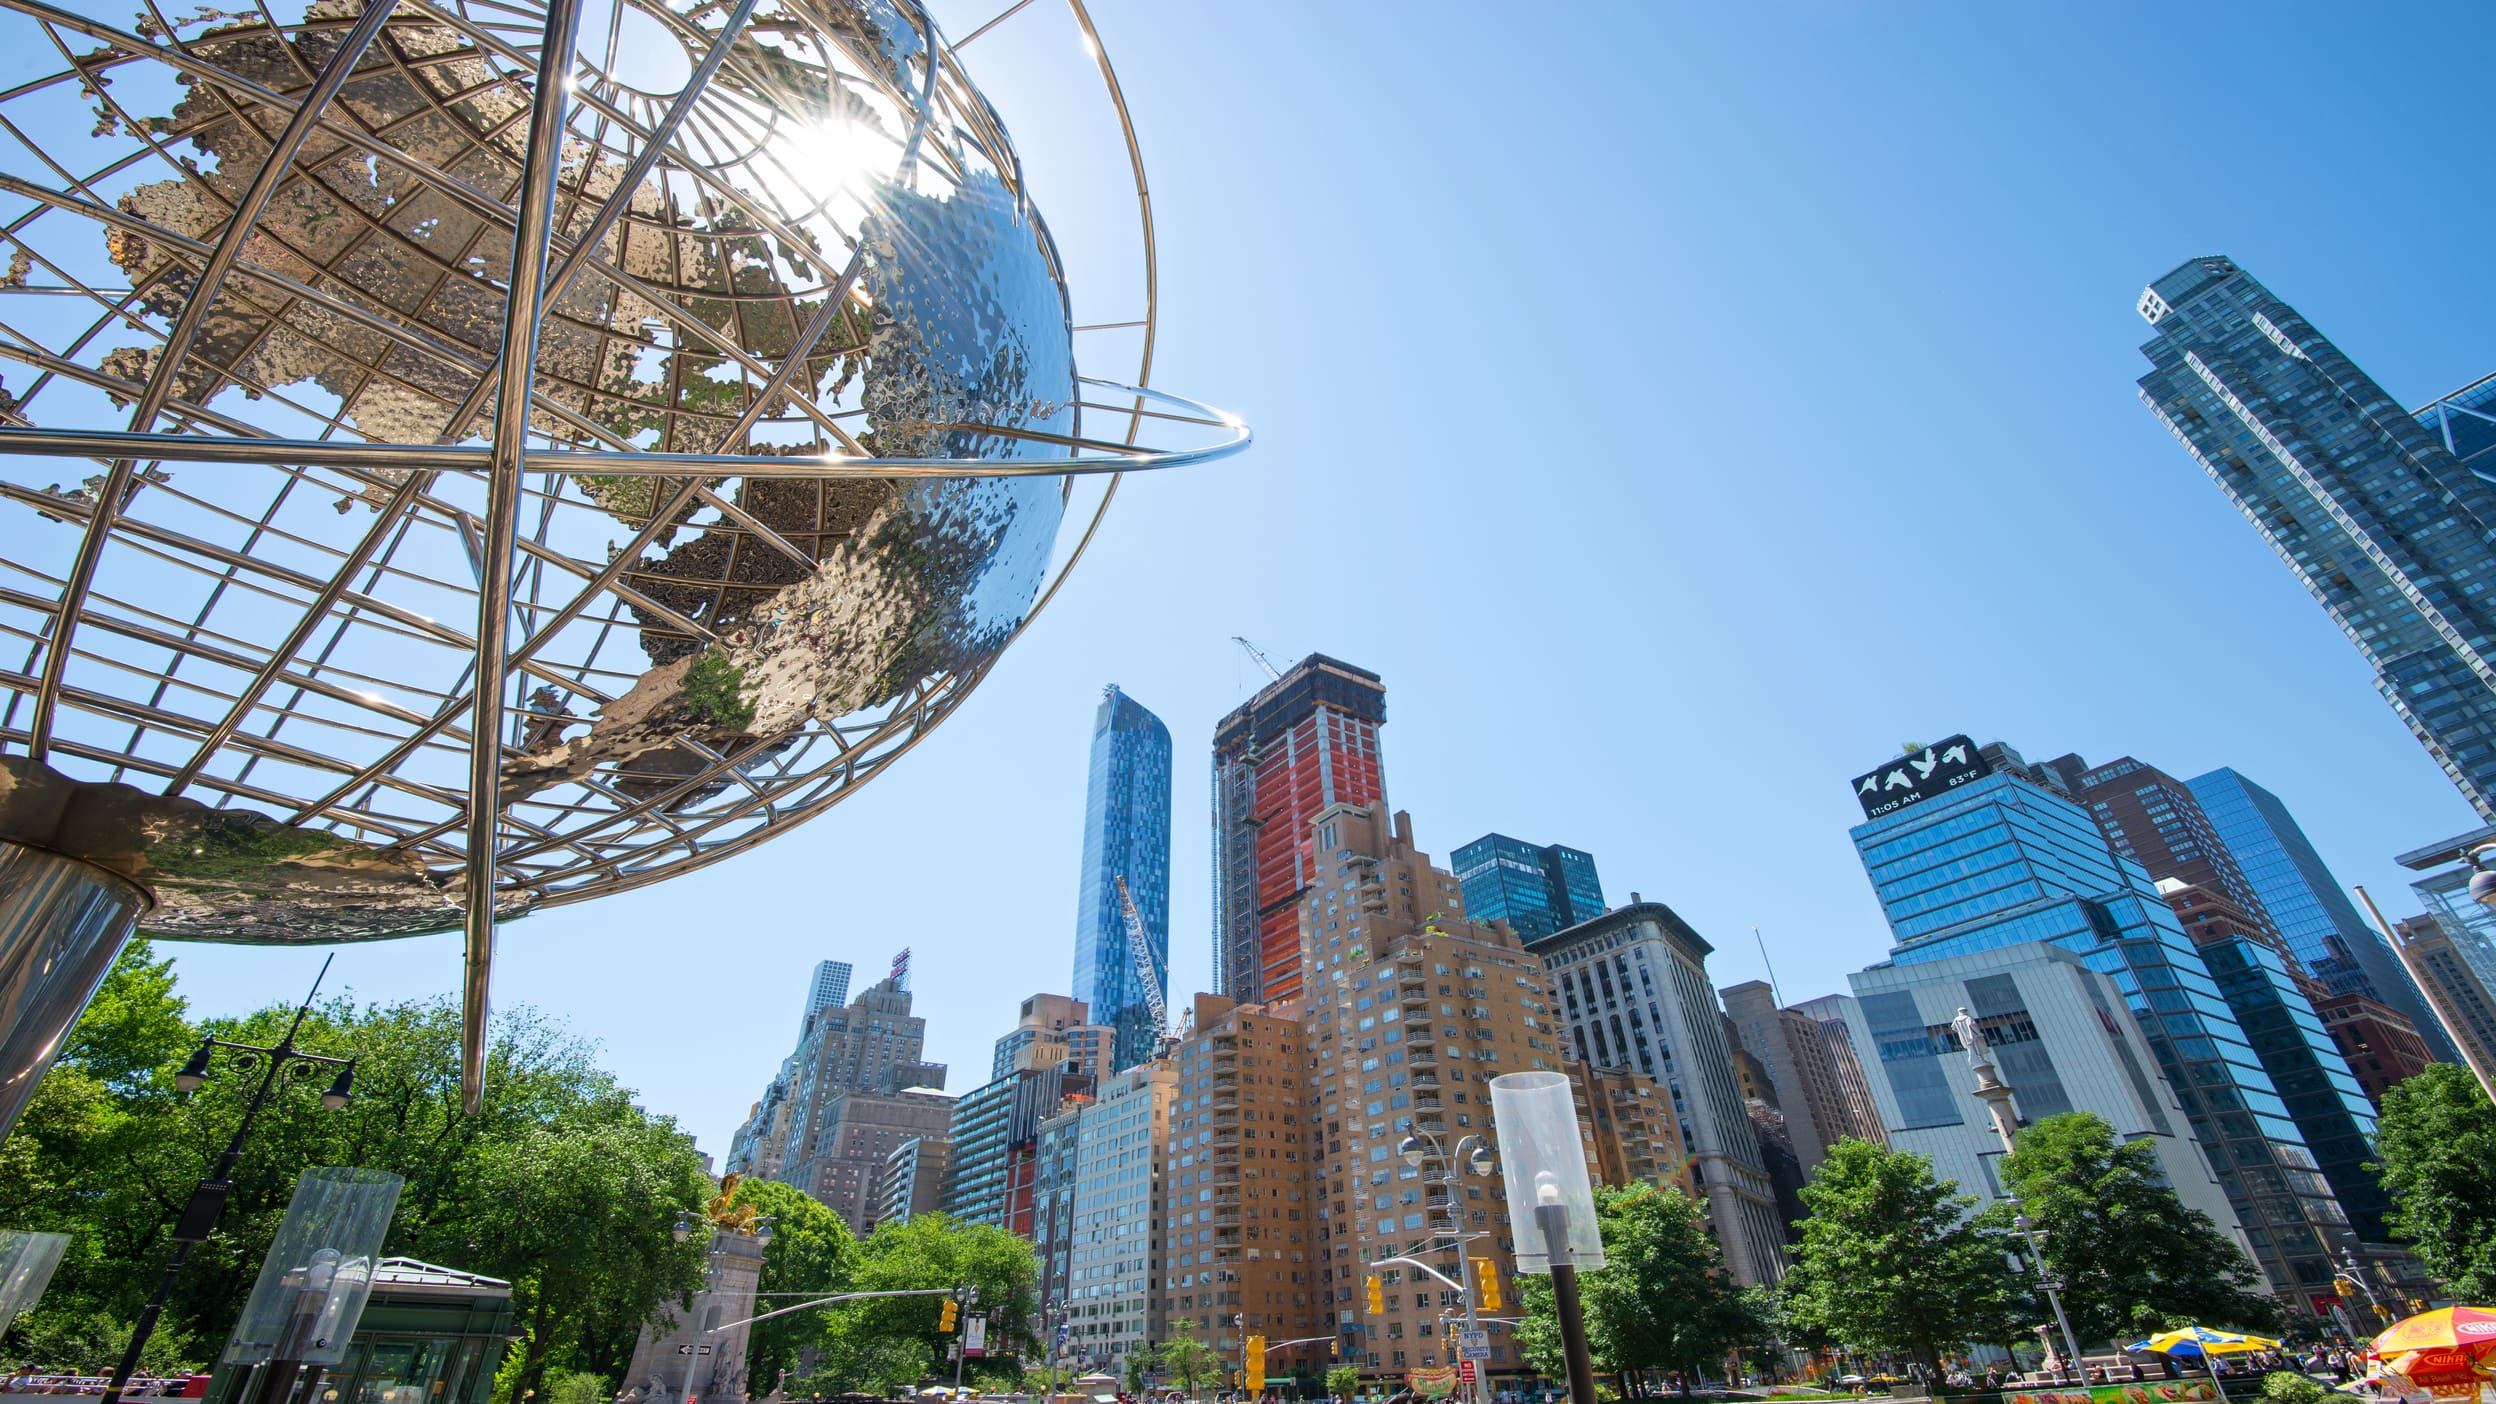 Silver globe at Columbus Circle in Manhattan New York, USA